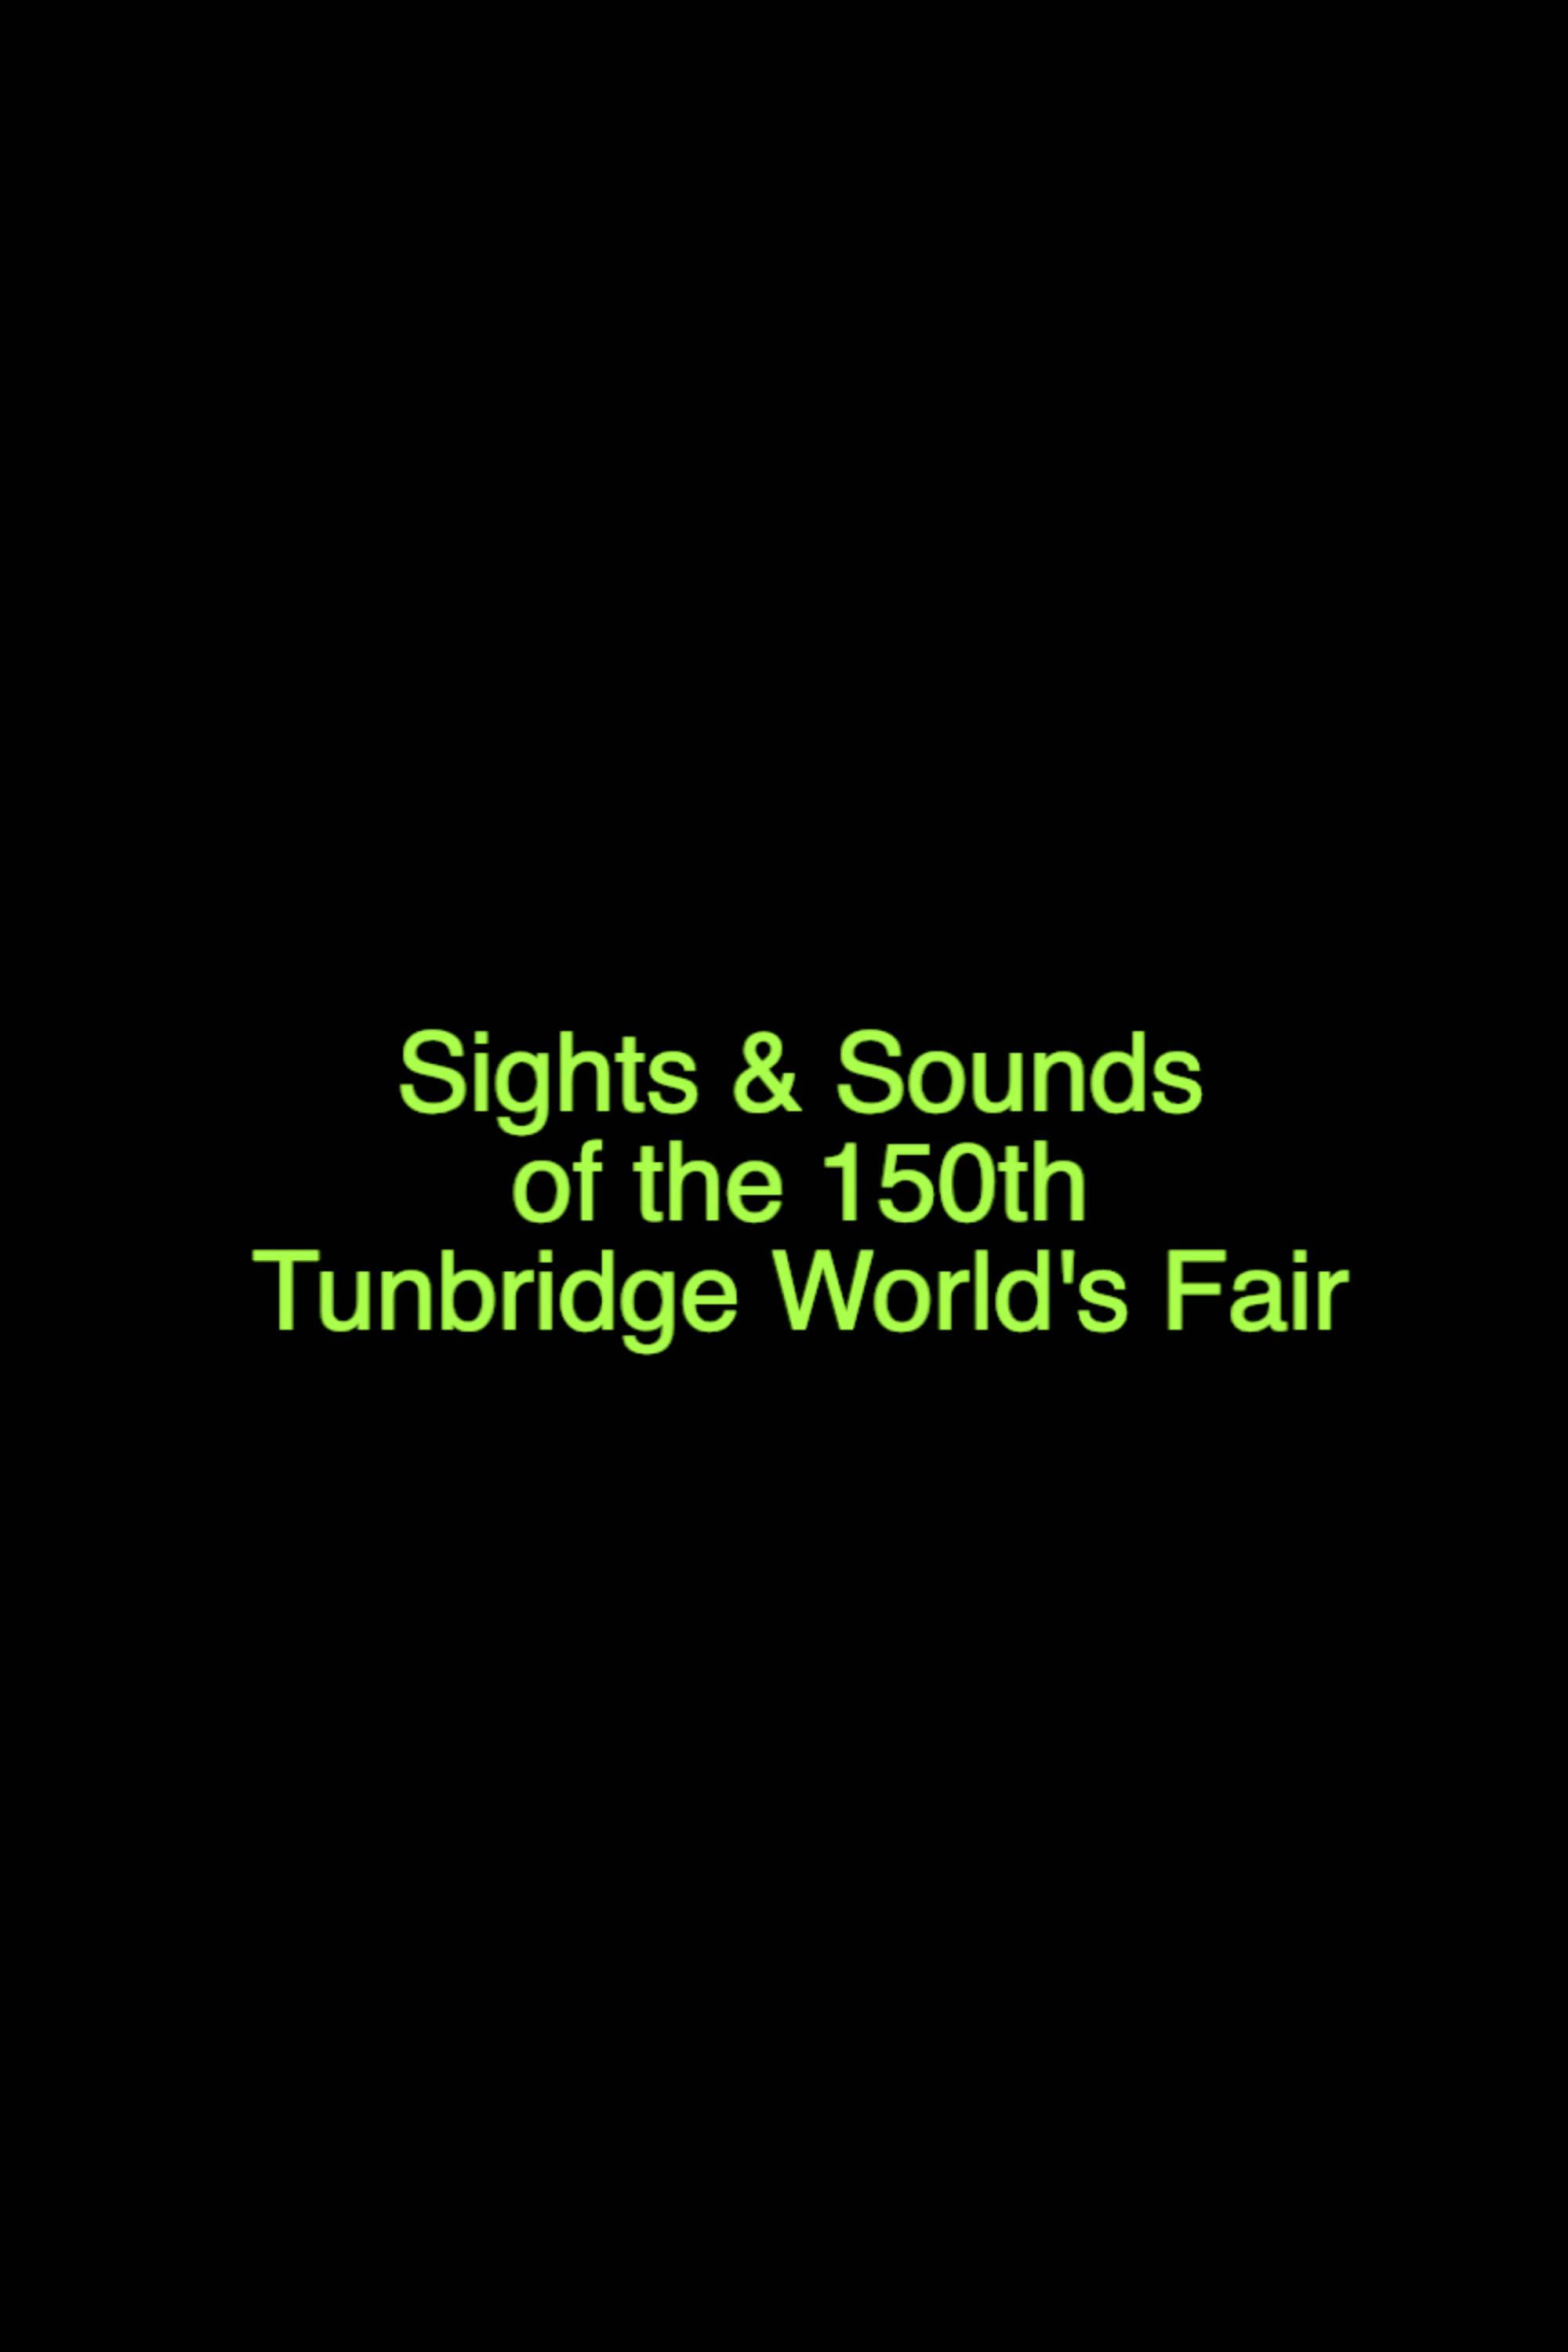 Sights & Sounds of the 150th Tunbridge World's Fair